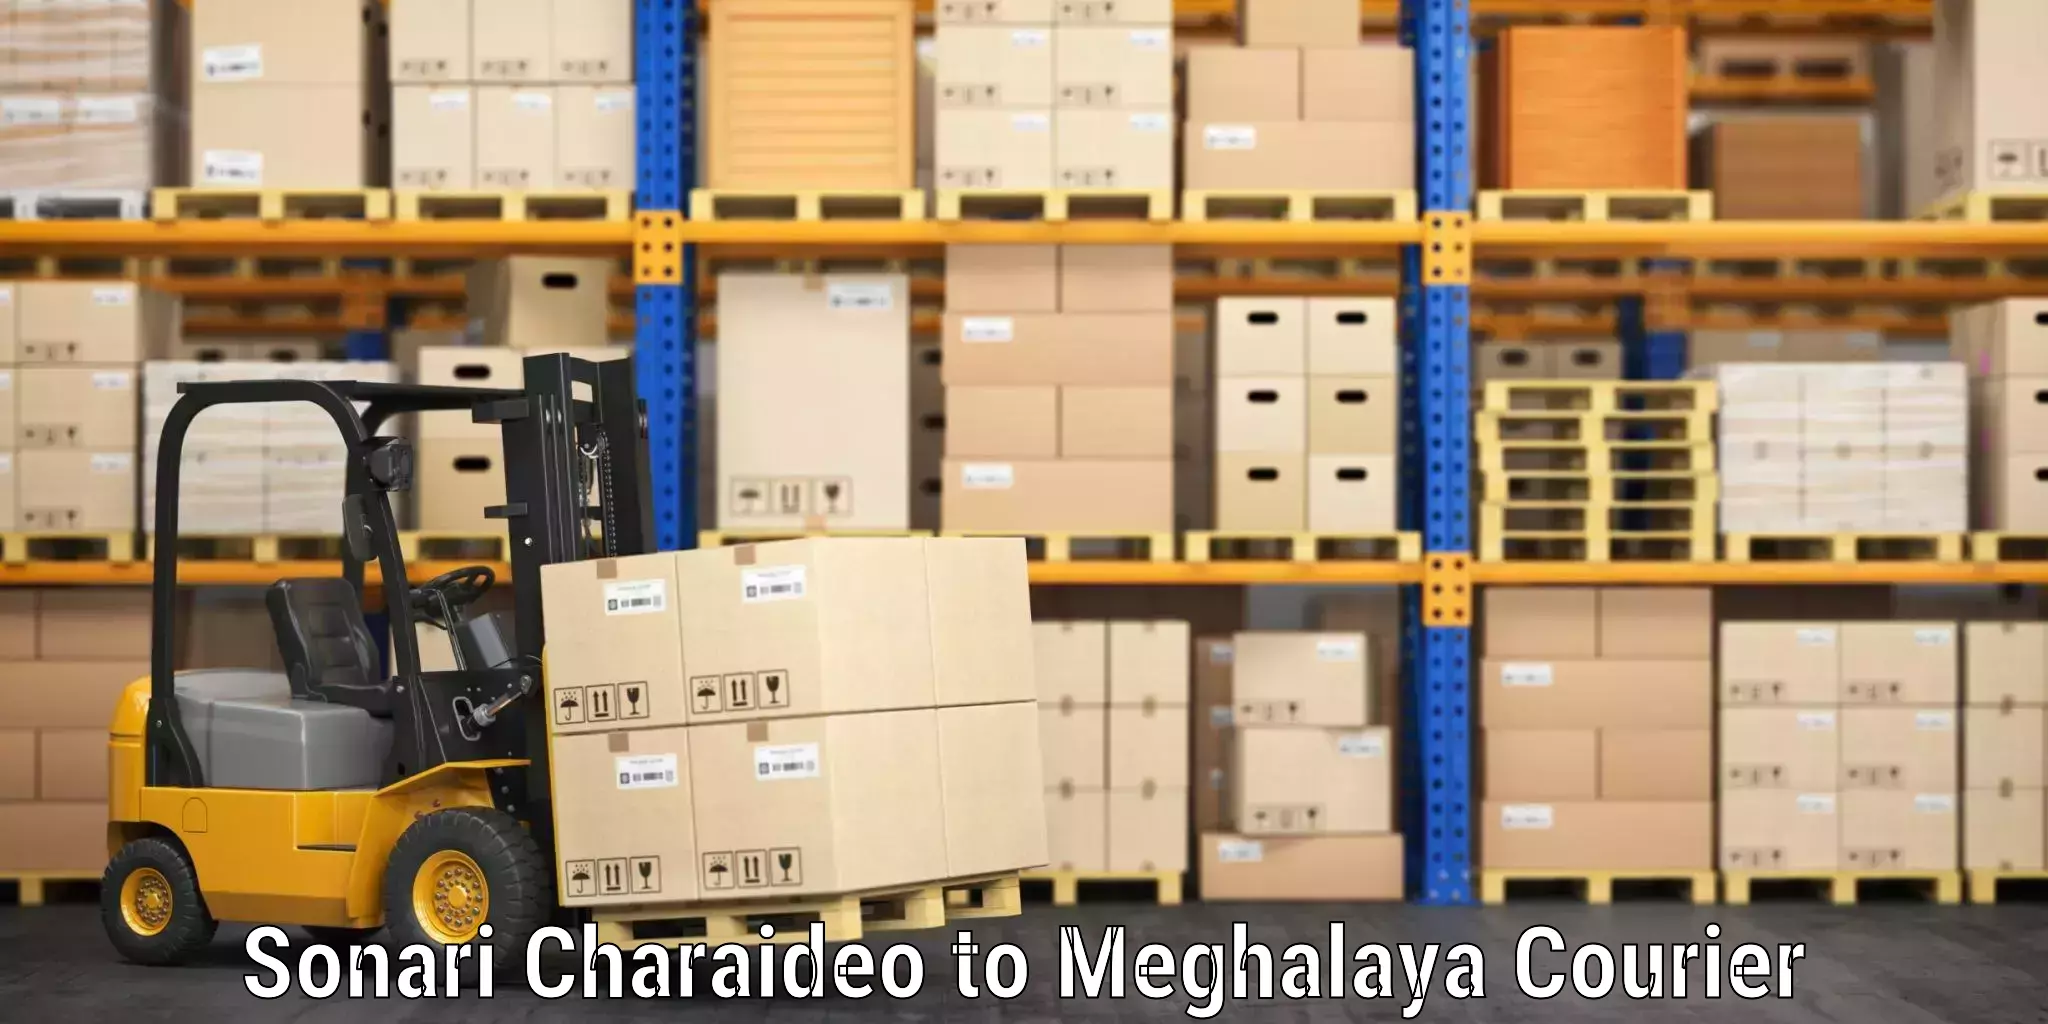 Luggage shipment processing Sonari Charaideo to Meghalaya